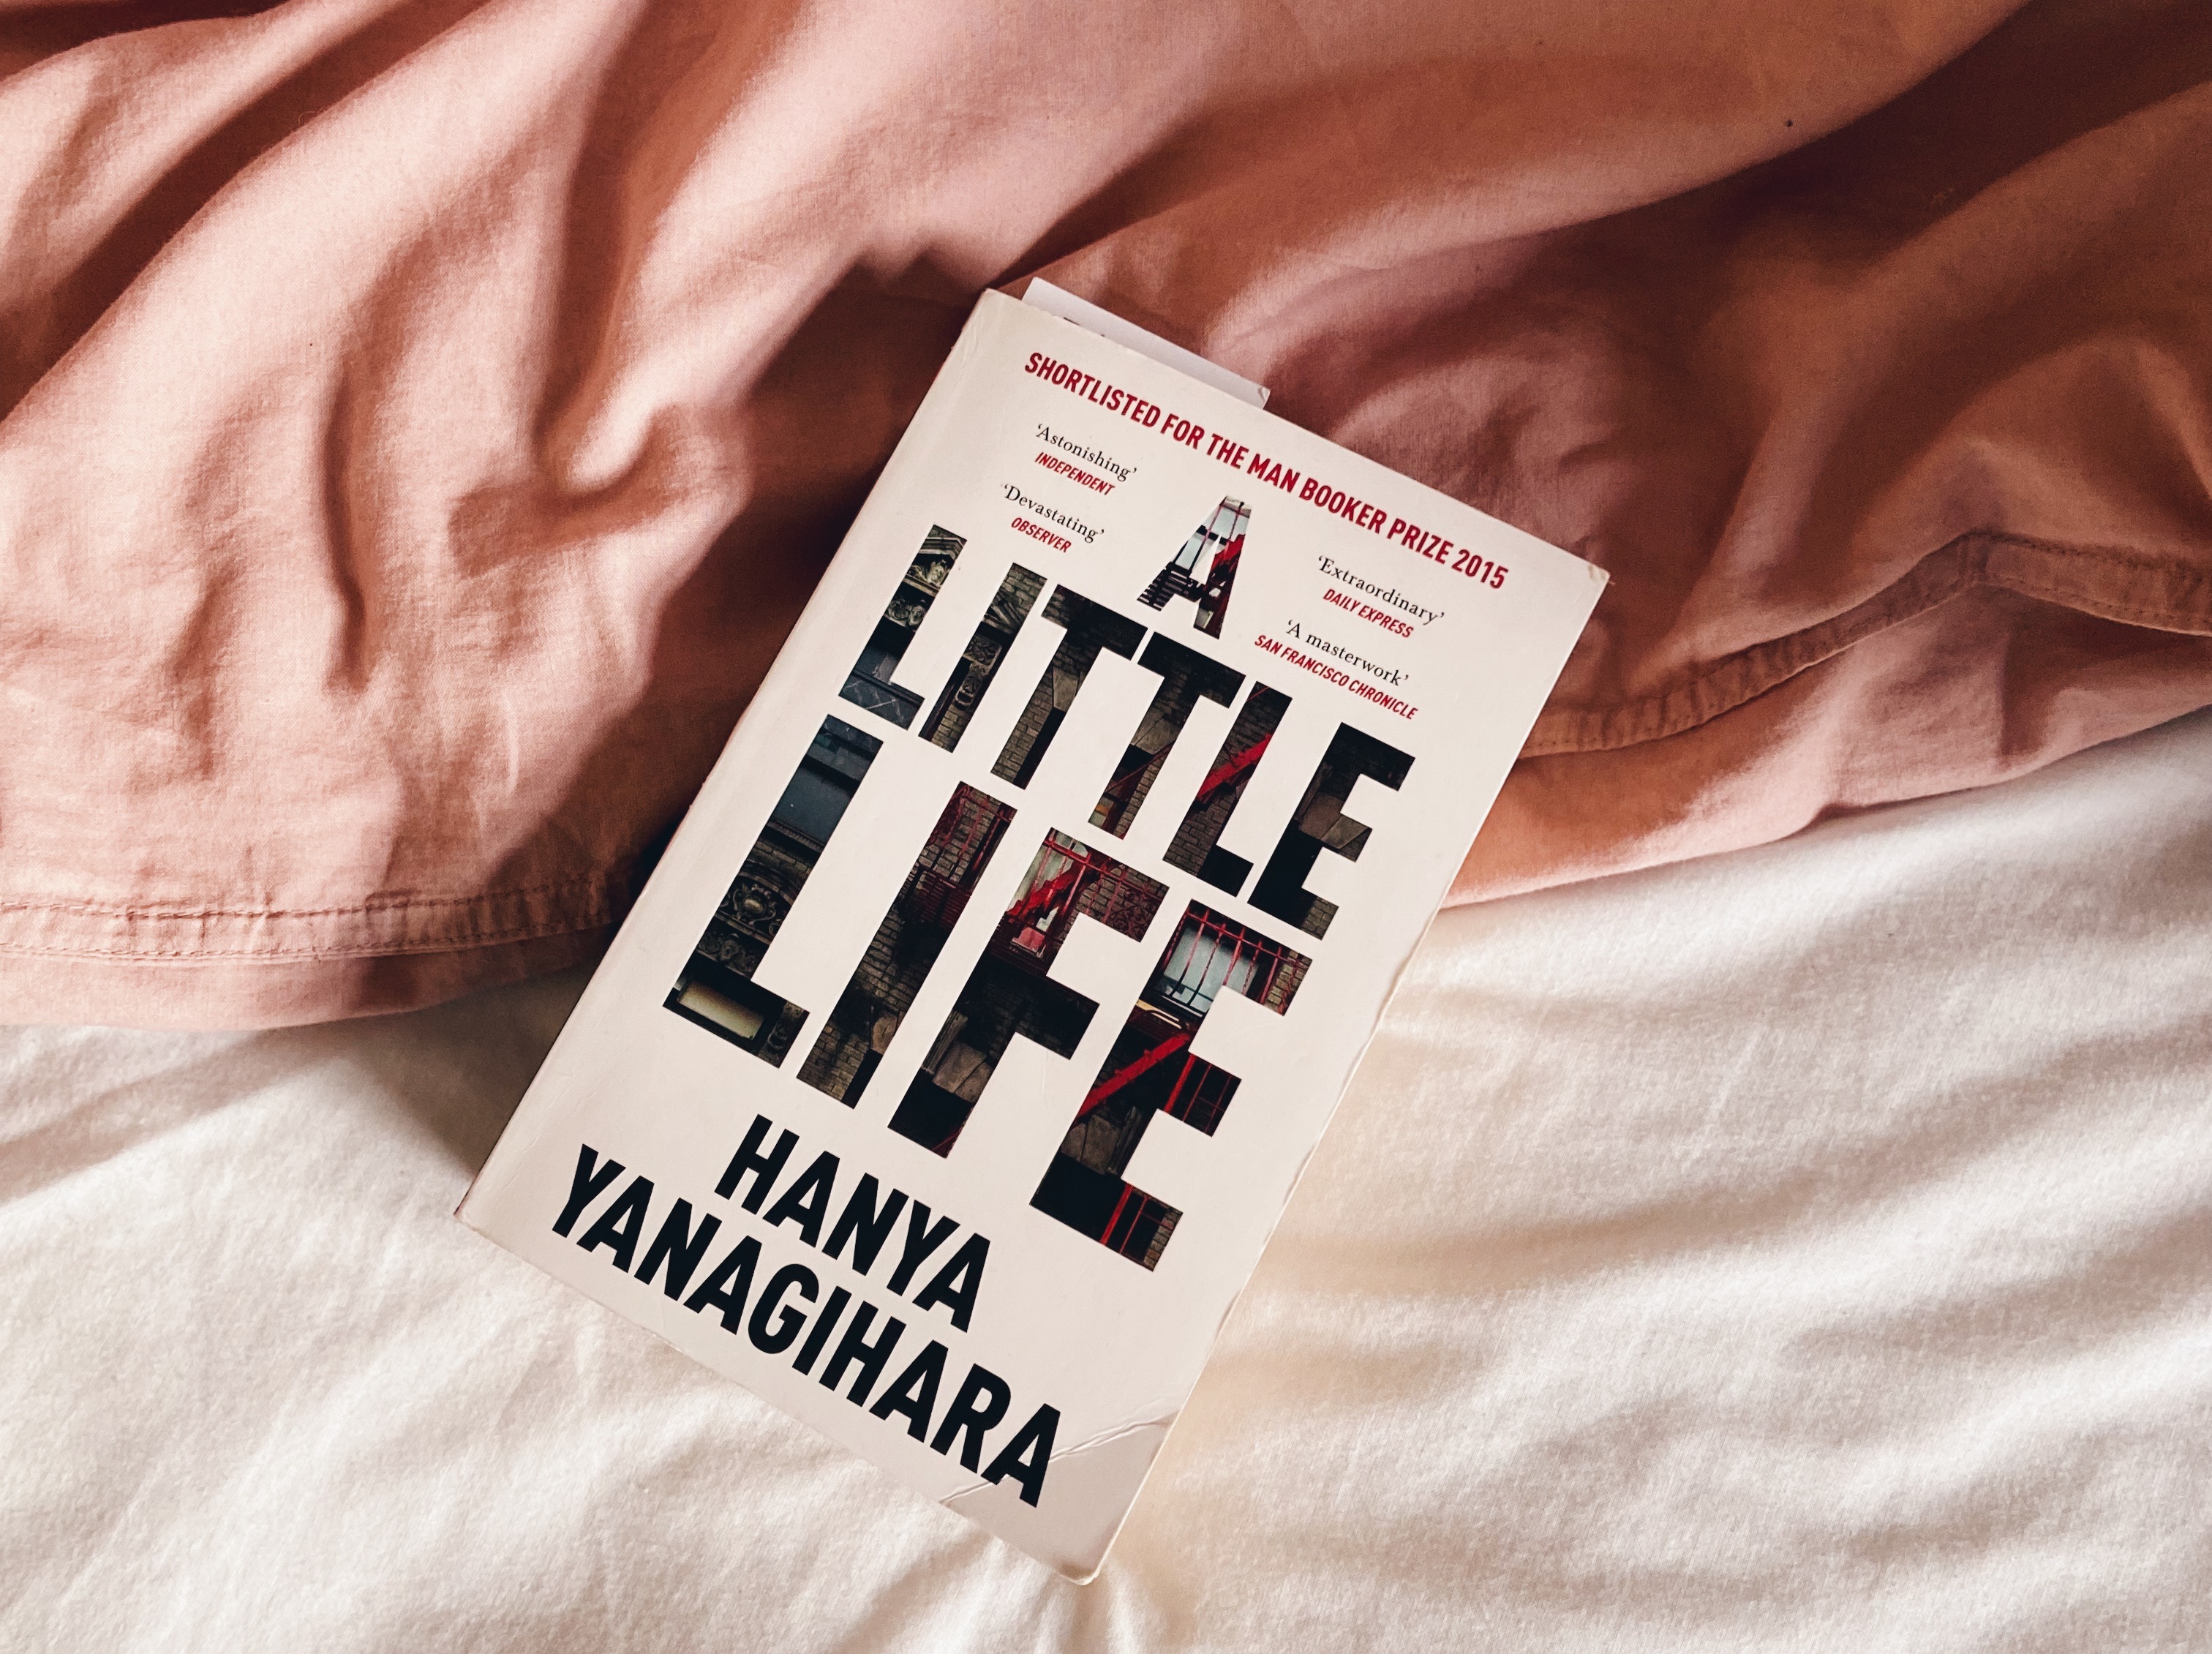 Reading guide: A Little Life by Hanya Yanagihara